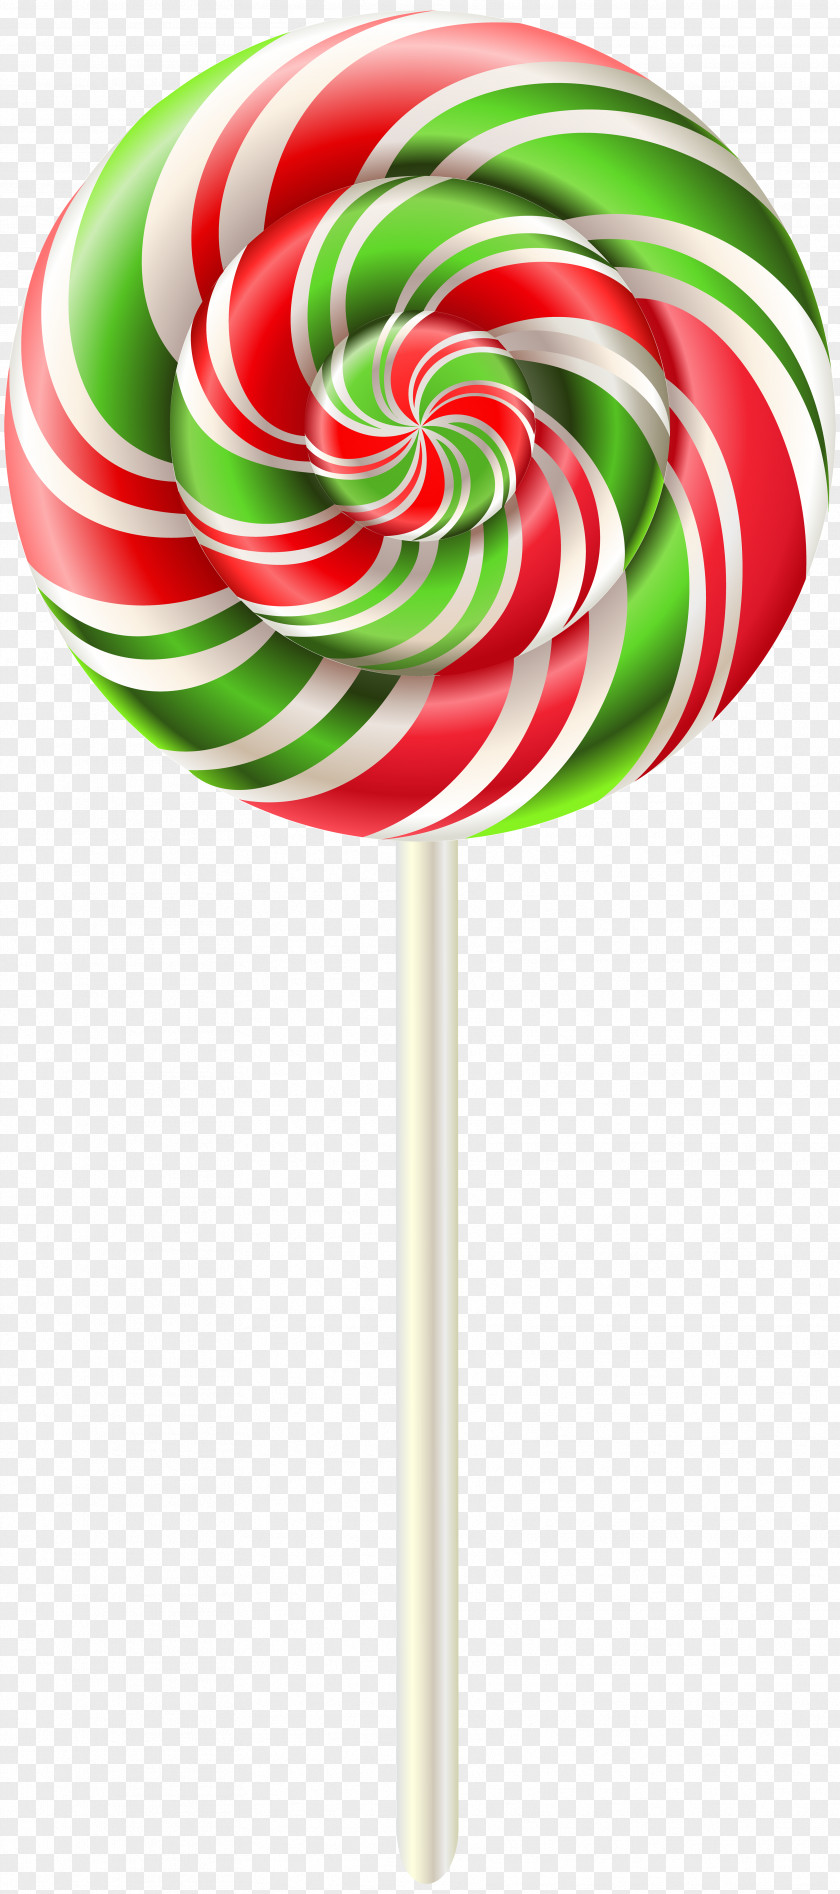 Rainbow Swirl Lollipop Transparent Clip Art Image PNG